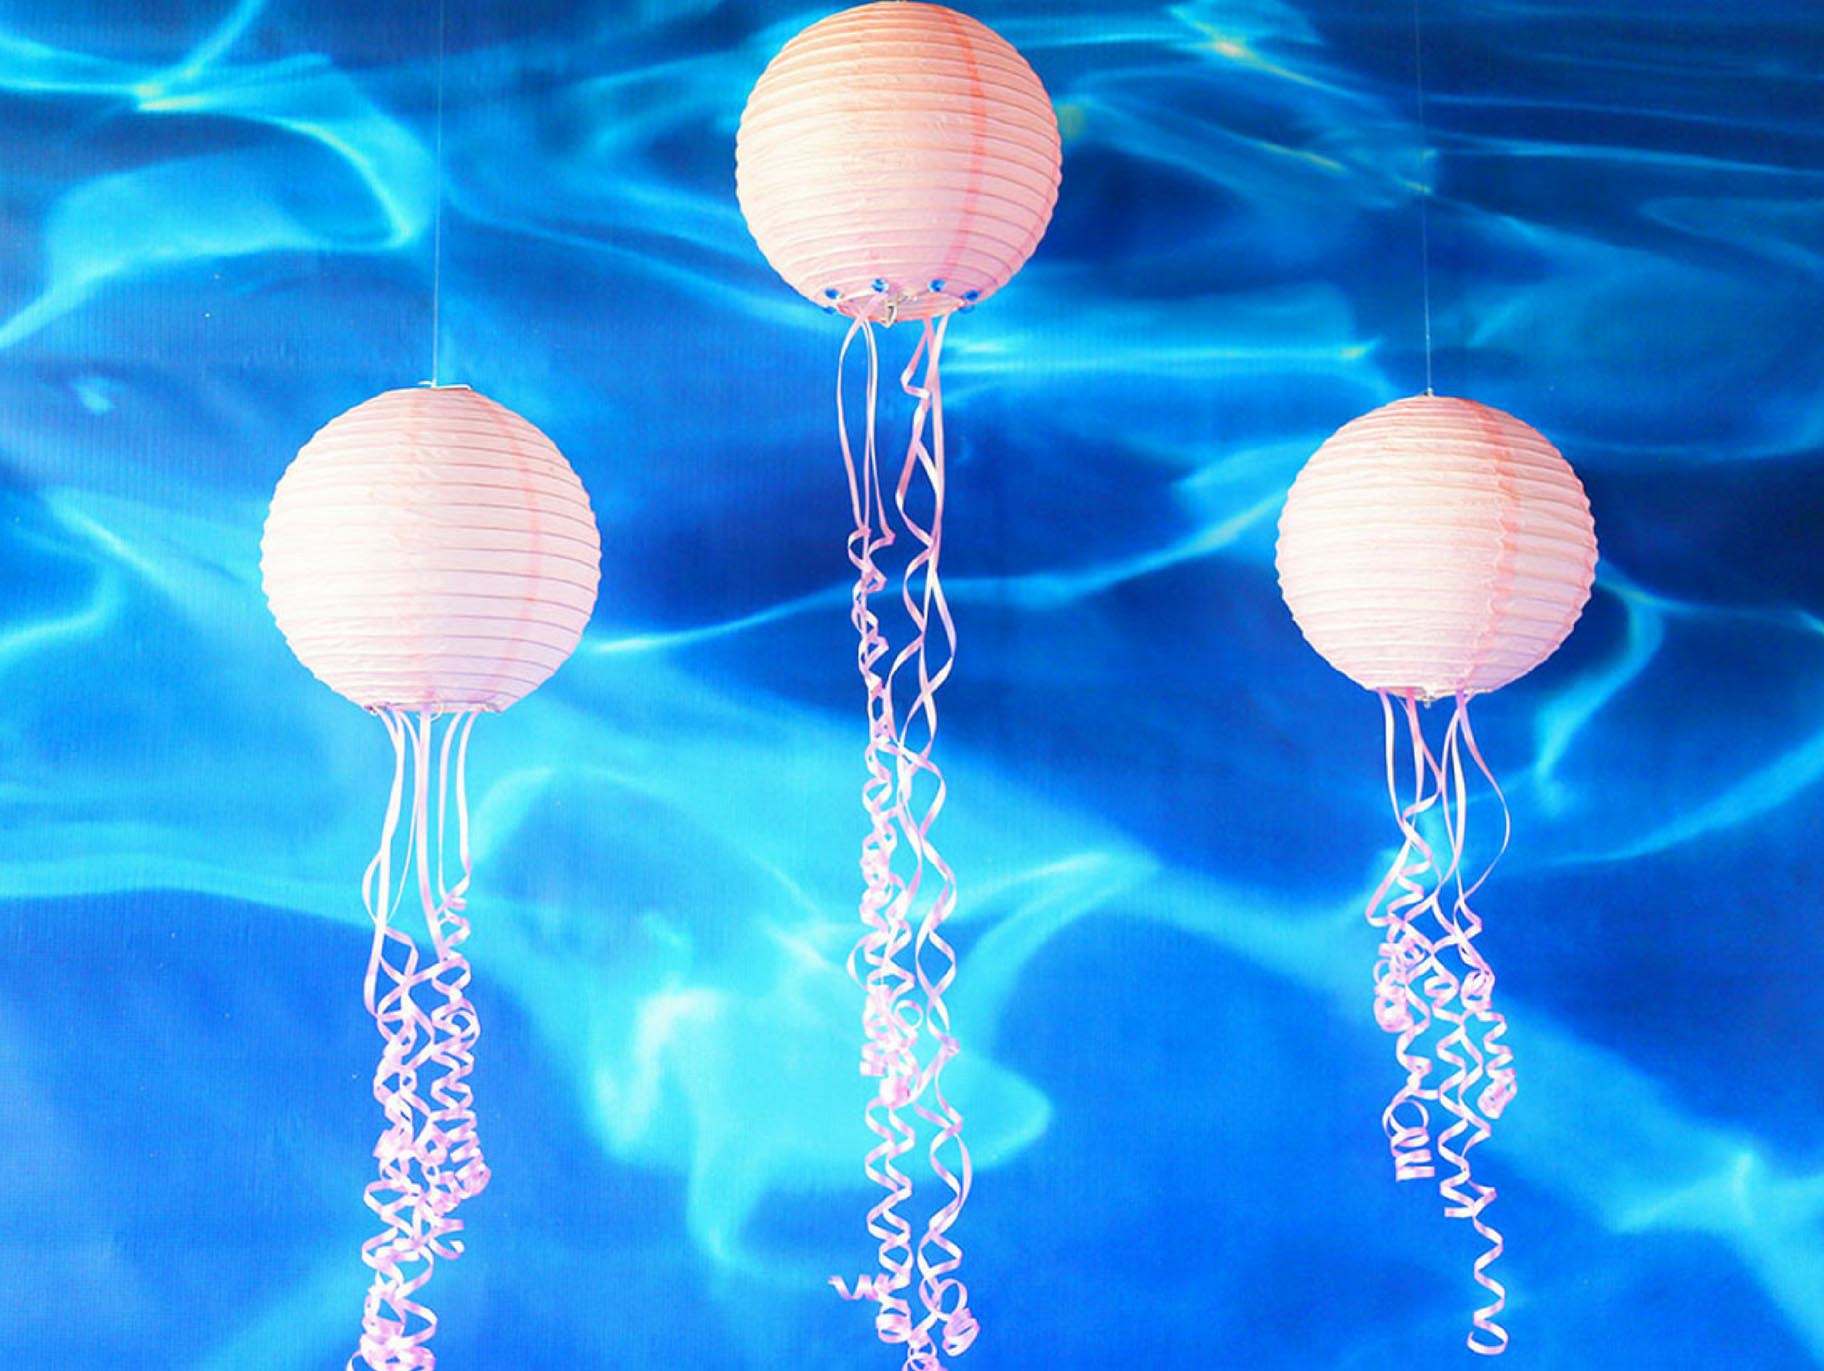 29 HQ Photos Diy Jellyfish Decorations : Paper Lantern Jellyfish Decorations How To Party City